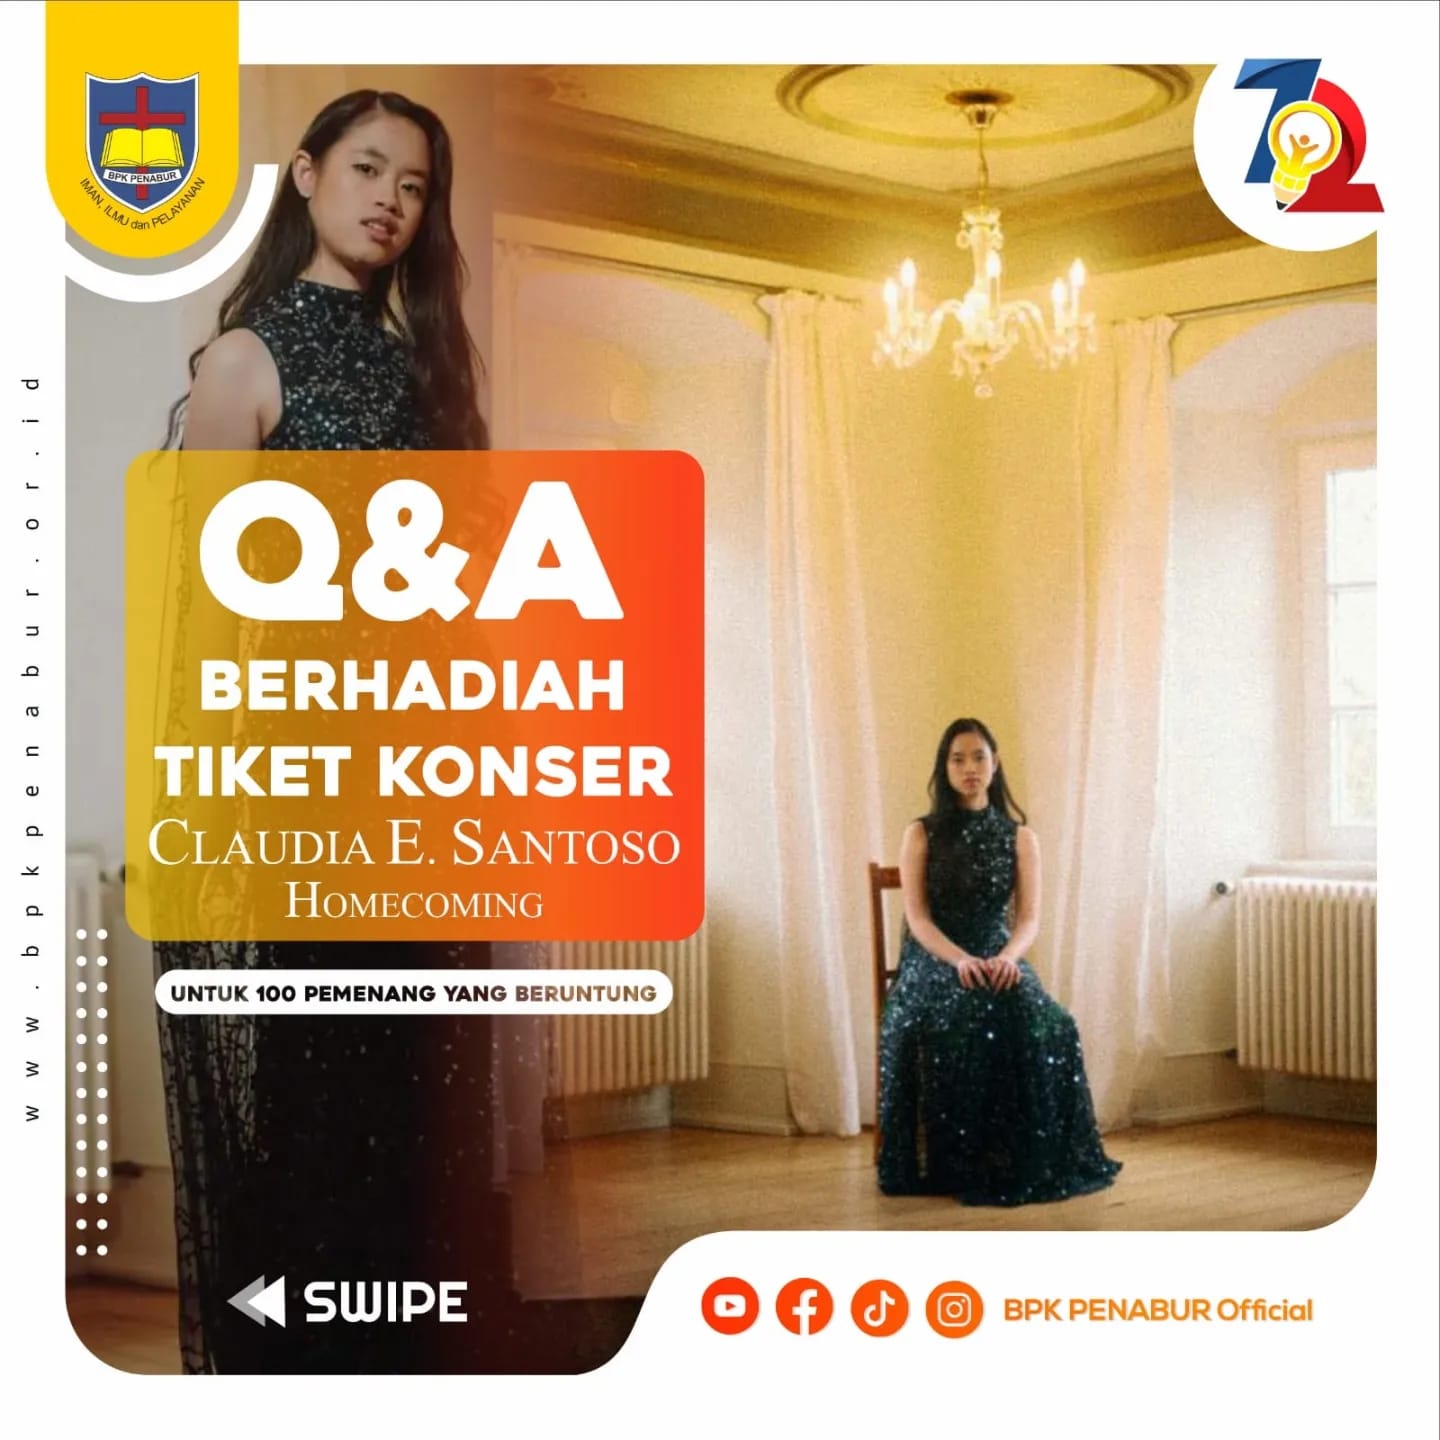 Q & A Berhadiah Tiket Konser Claudia E. Santoso